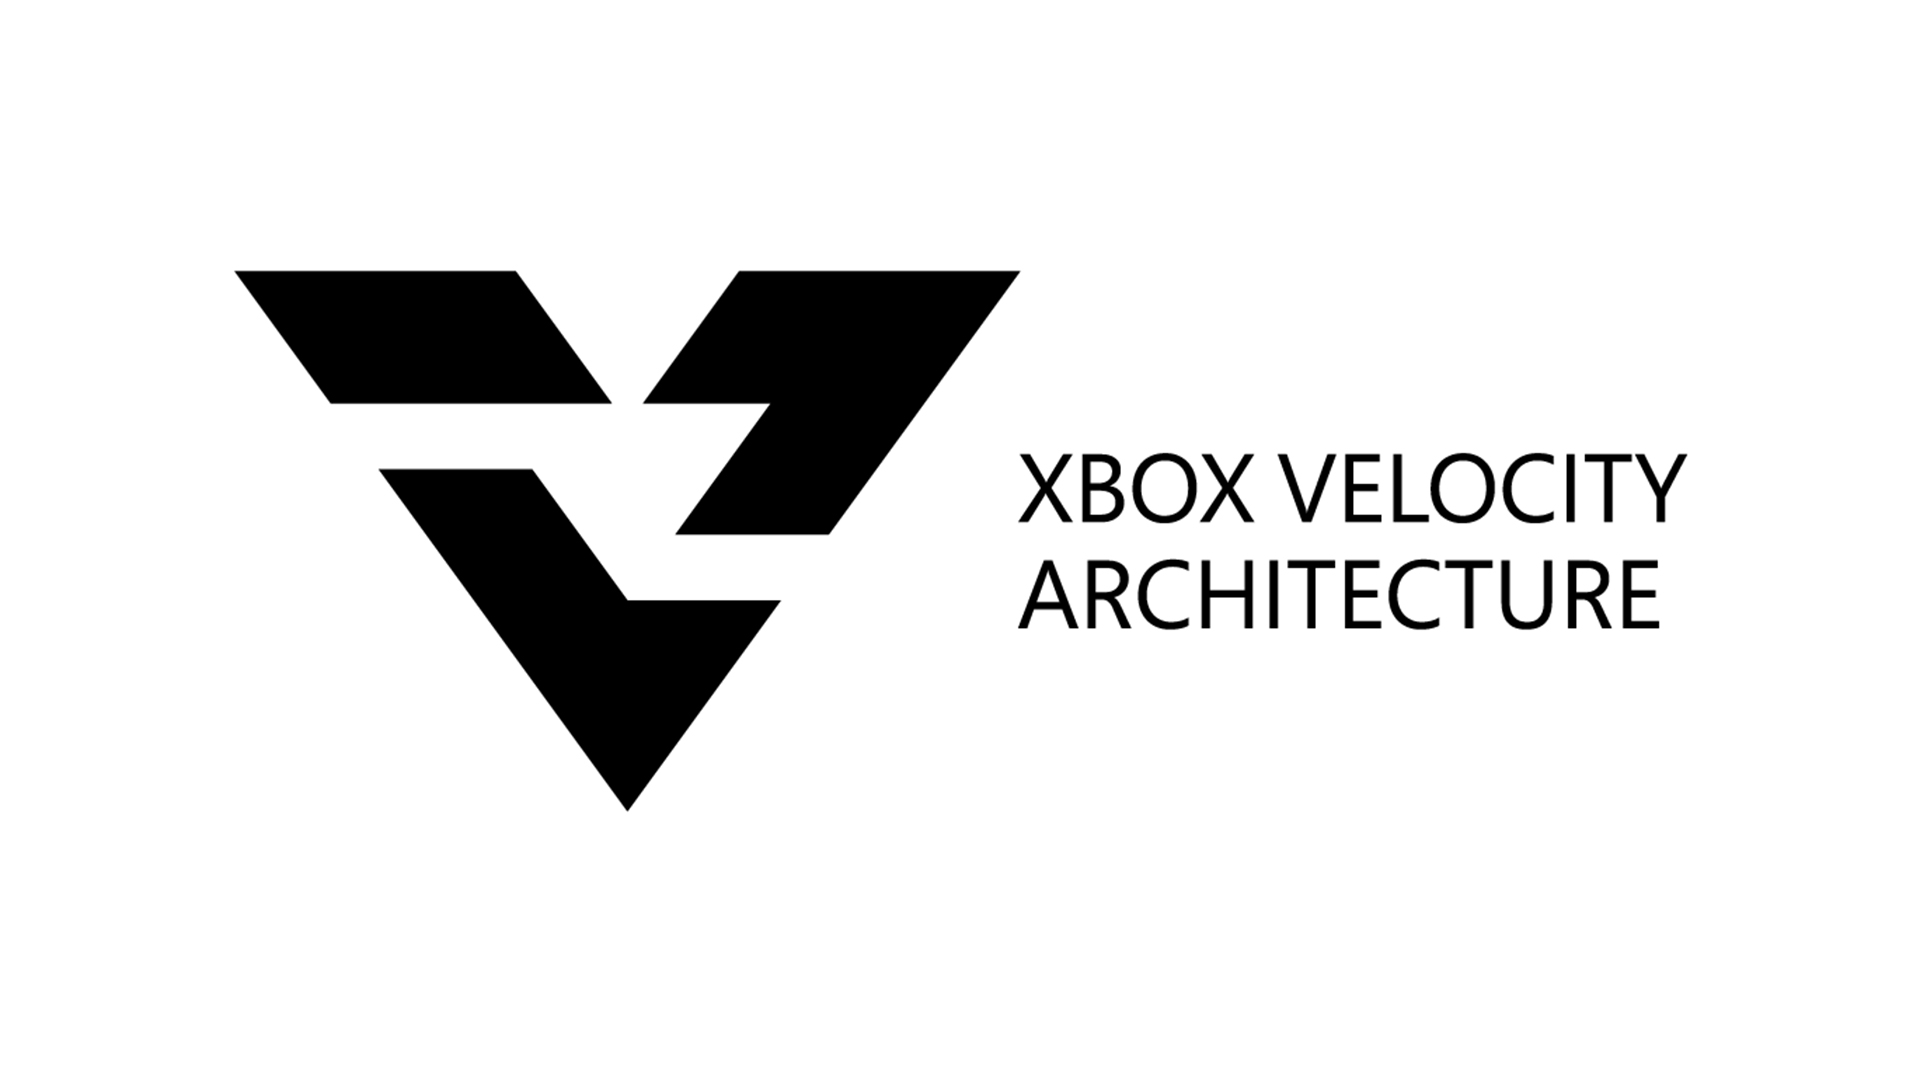 Xbox Series XS – Official Next-Gen Walkthrough – Full Demo [4K] 